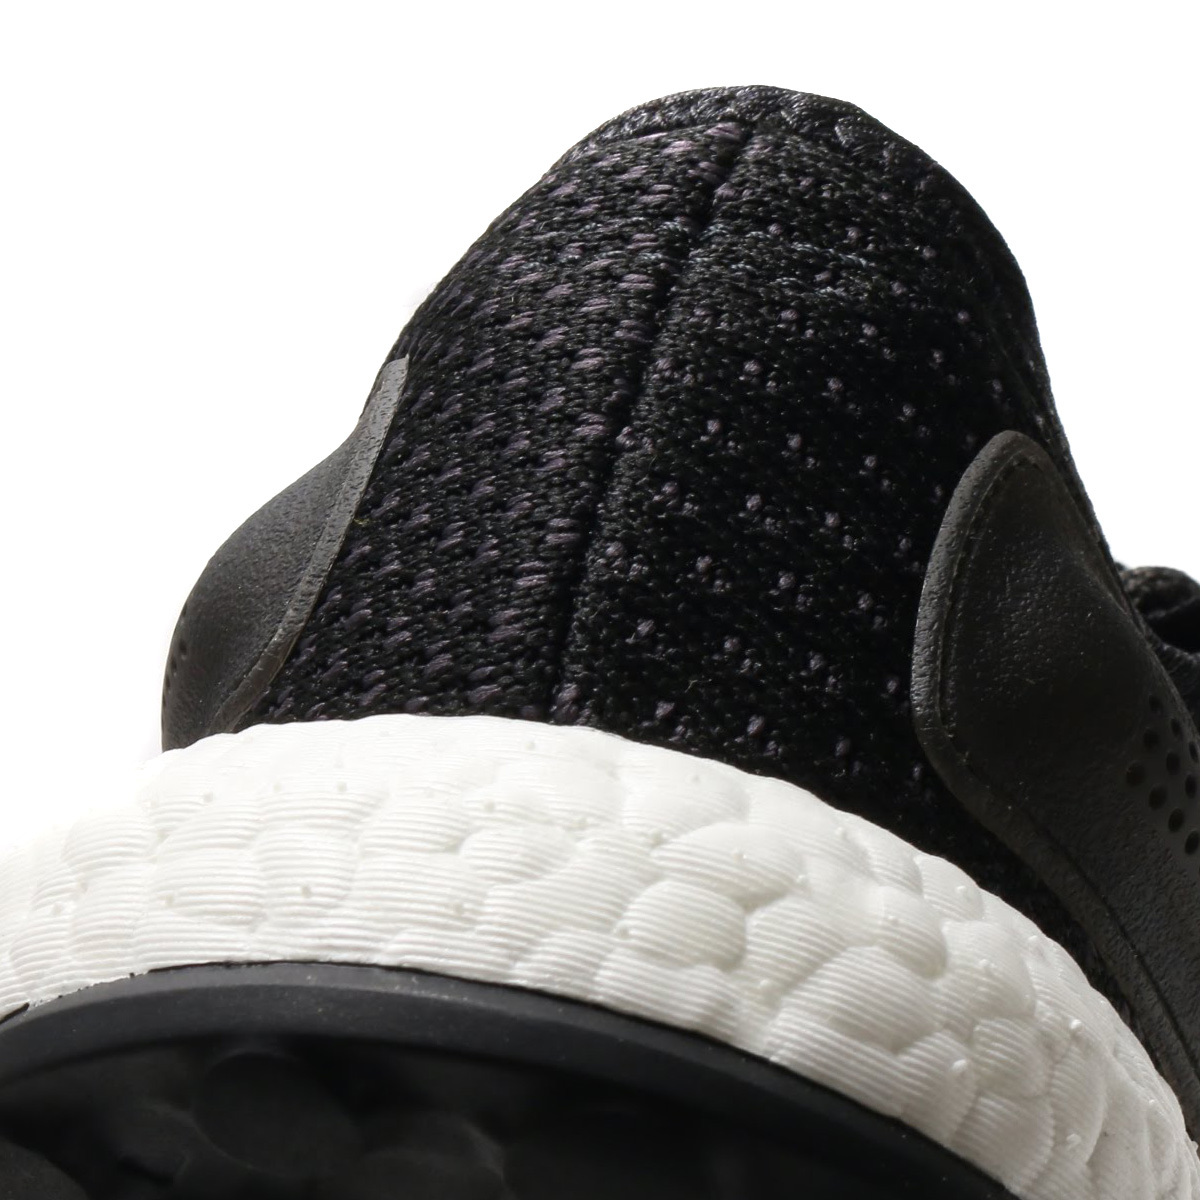  Adidas pure boost klaima27cm regular price 19800 jpy black black PureBOOST CLIMA running shoes 